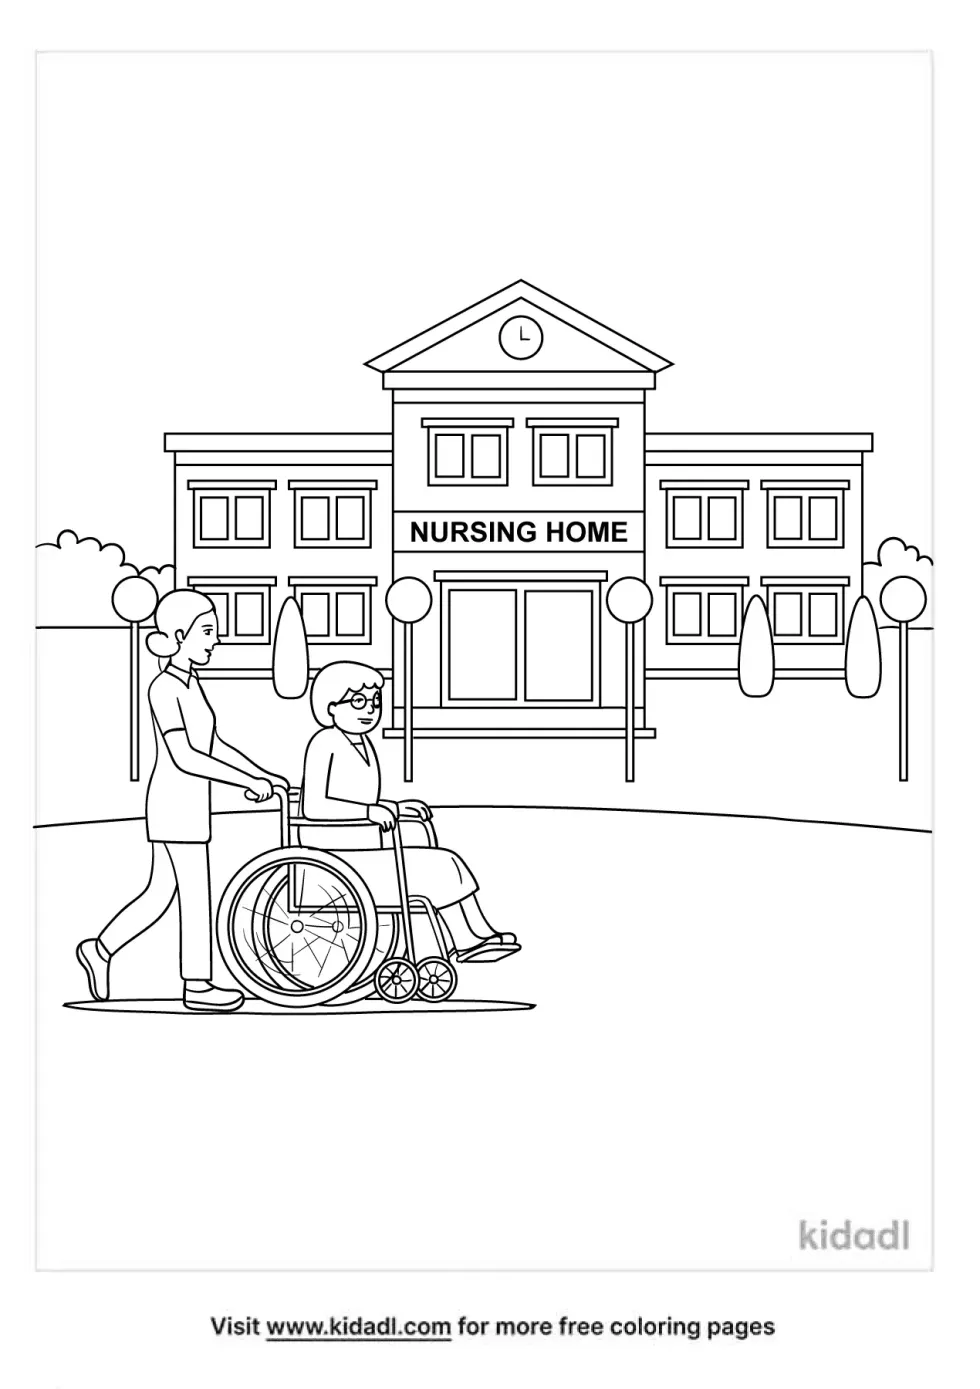 Nursing Home Coloring Page